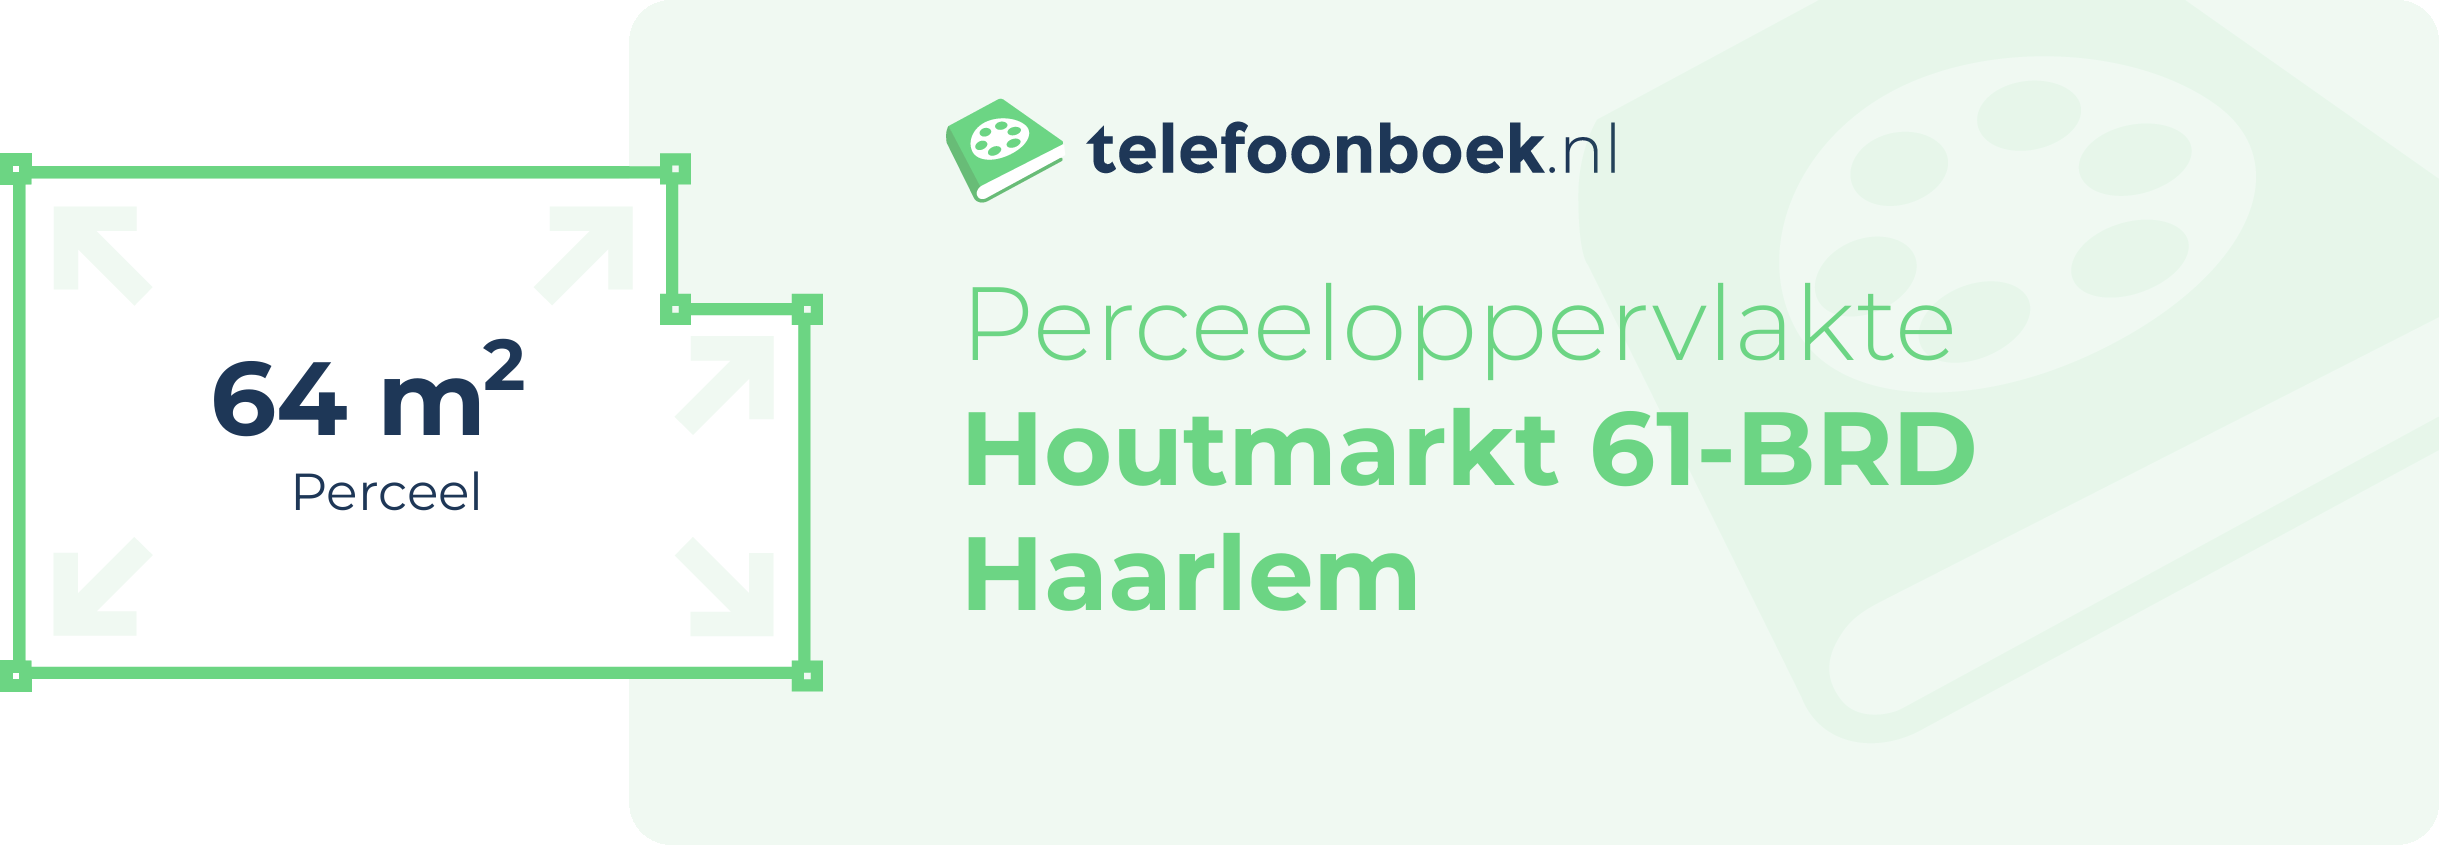 Perceeloppervlakte Houtmarkt 61-BRD Haarlem